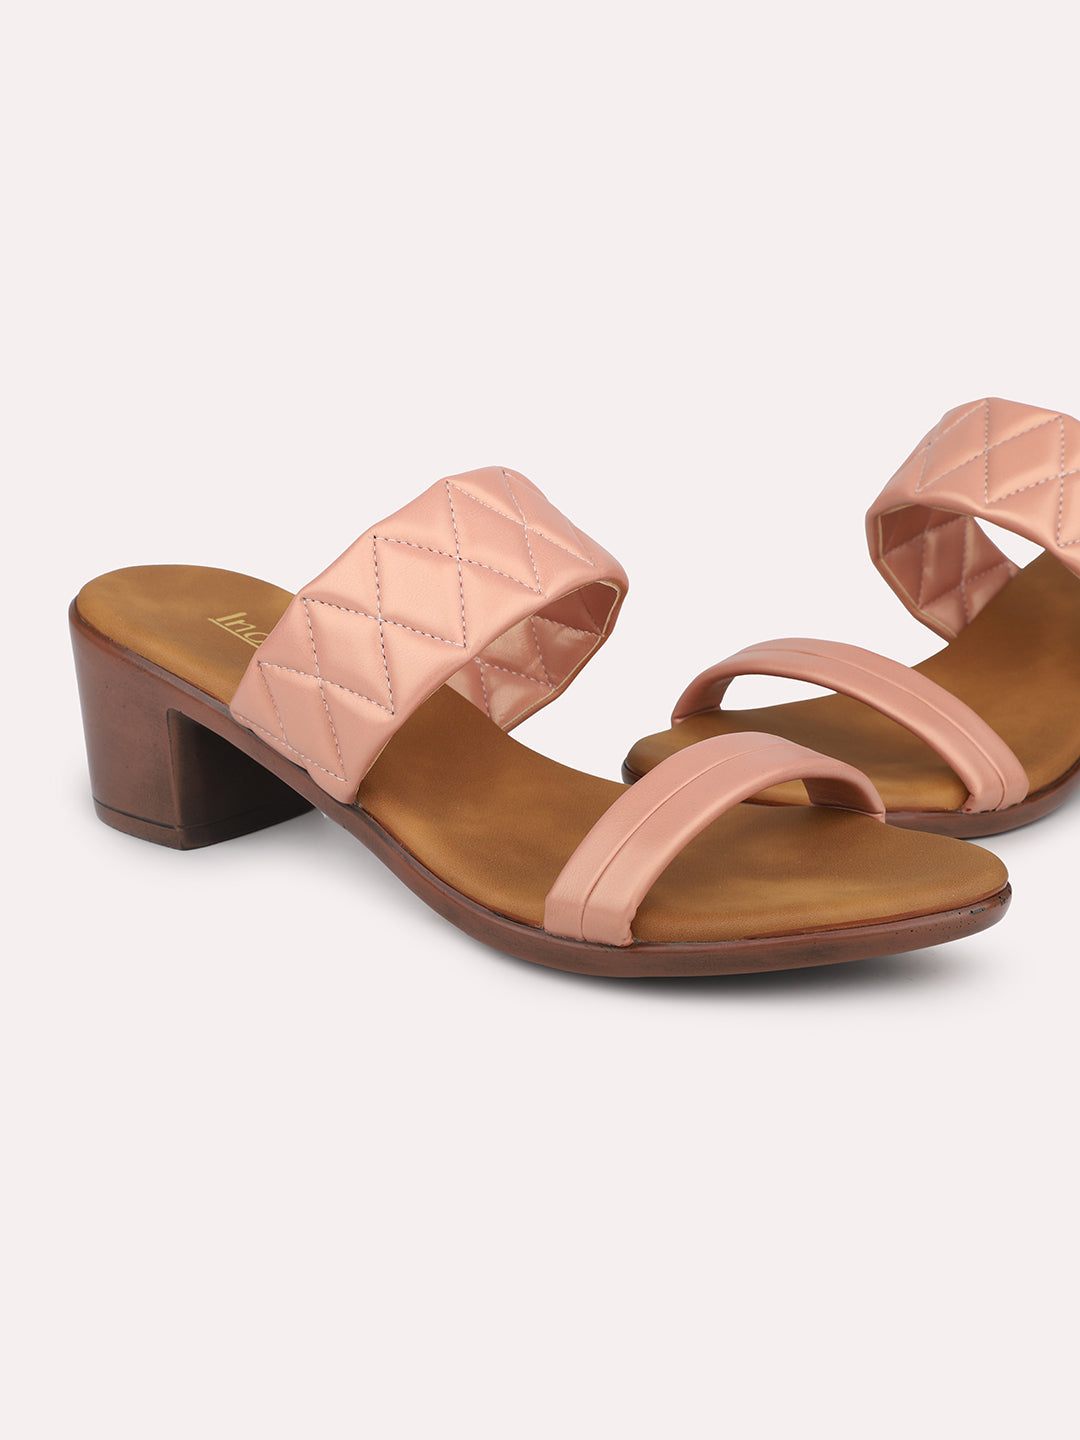 Womens Sexy Wedge Ankle Strap Sandals Platform Super High Heels Peep Toe  Shoes | eBay